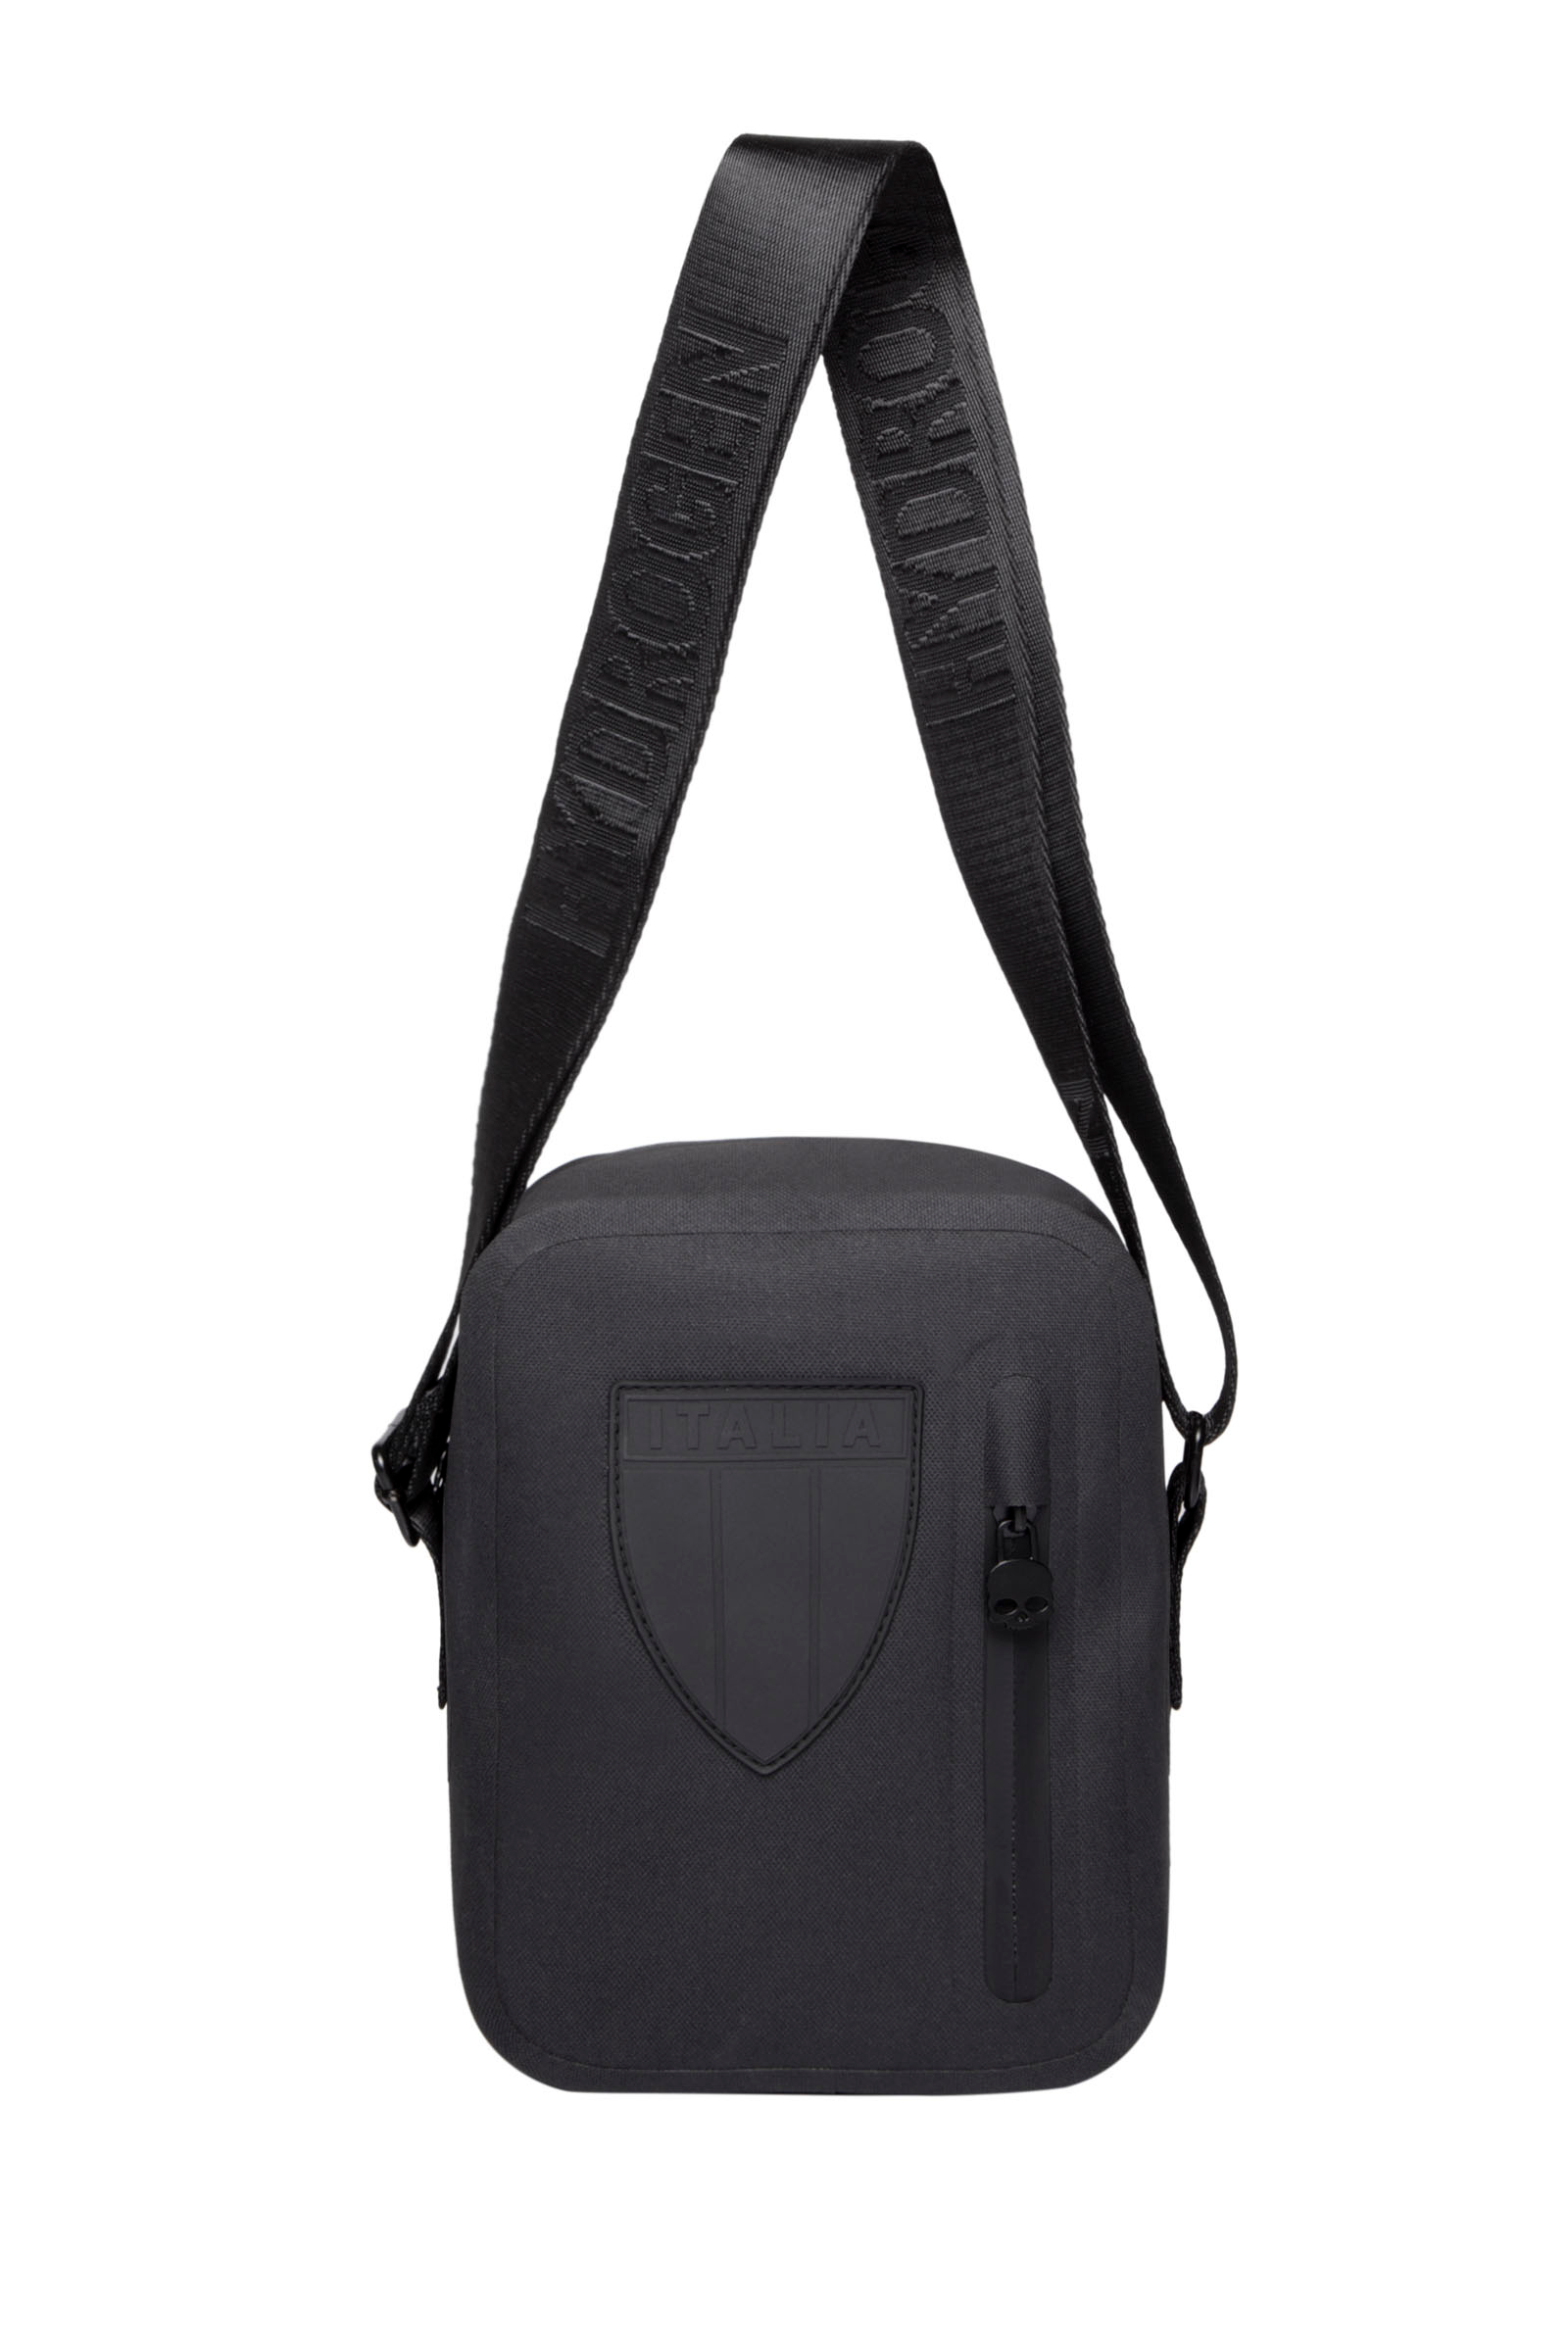 SHOULDER BAG - BLACK - Hydrogen - Luxury Sportwear